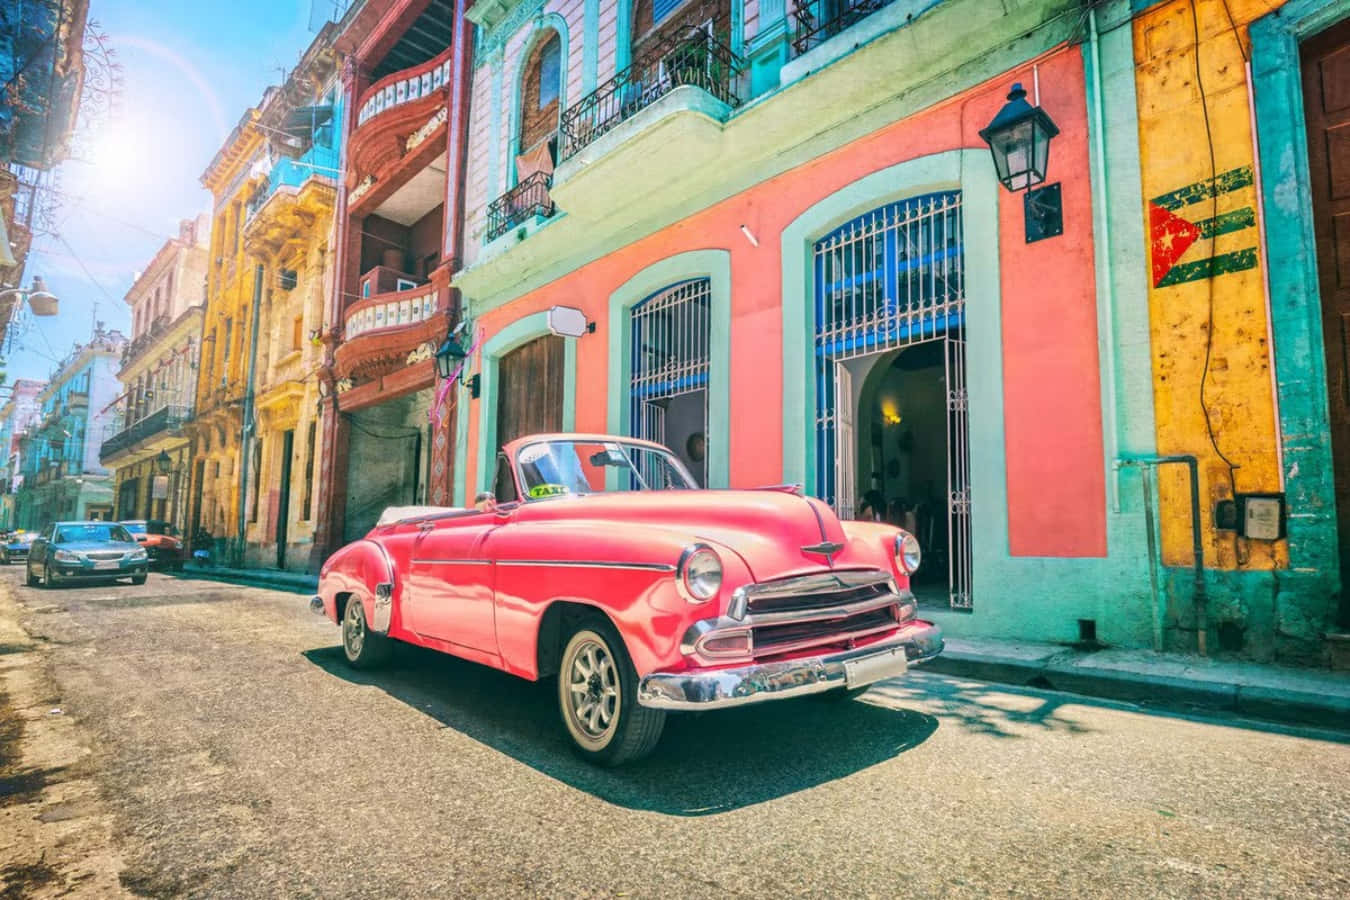 Colorful Sights of Old Havana, Cuba